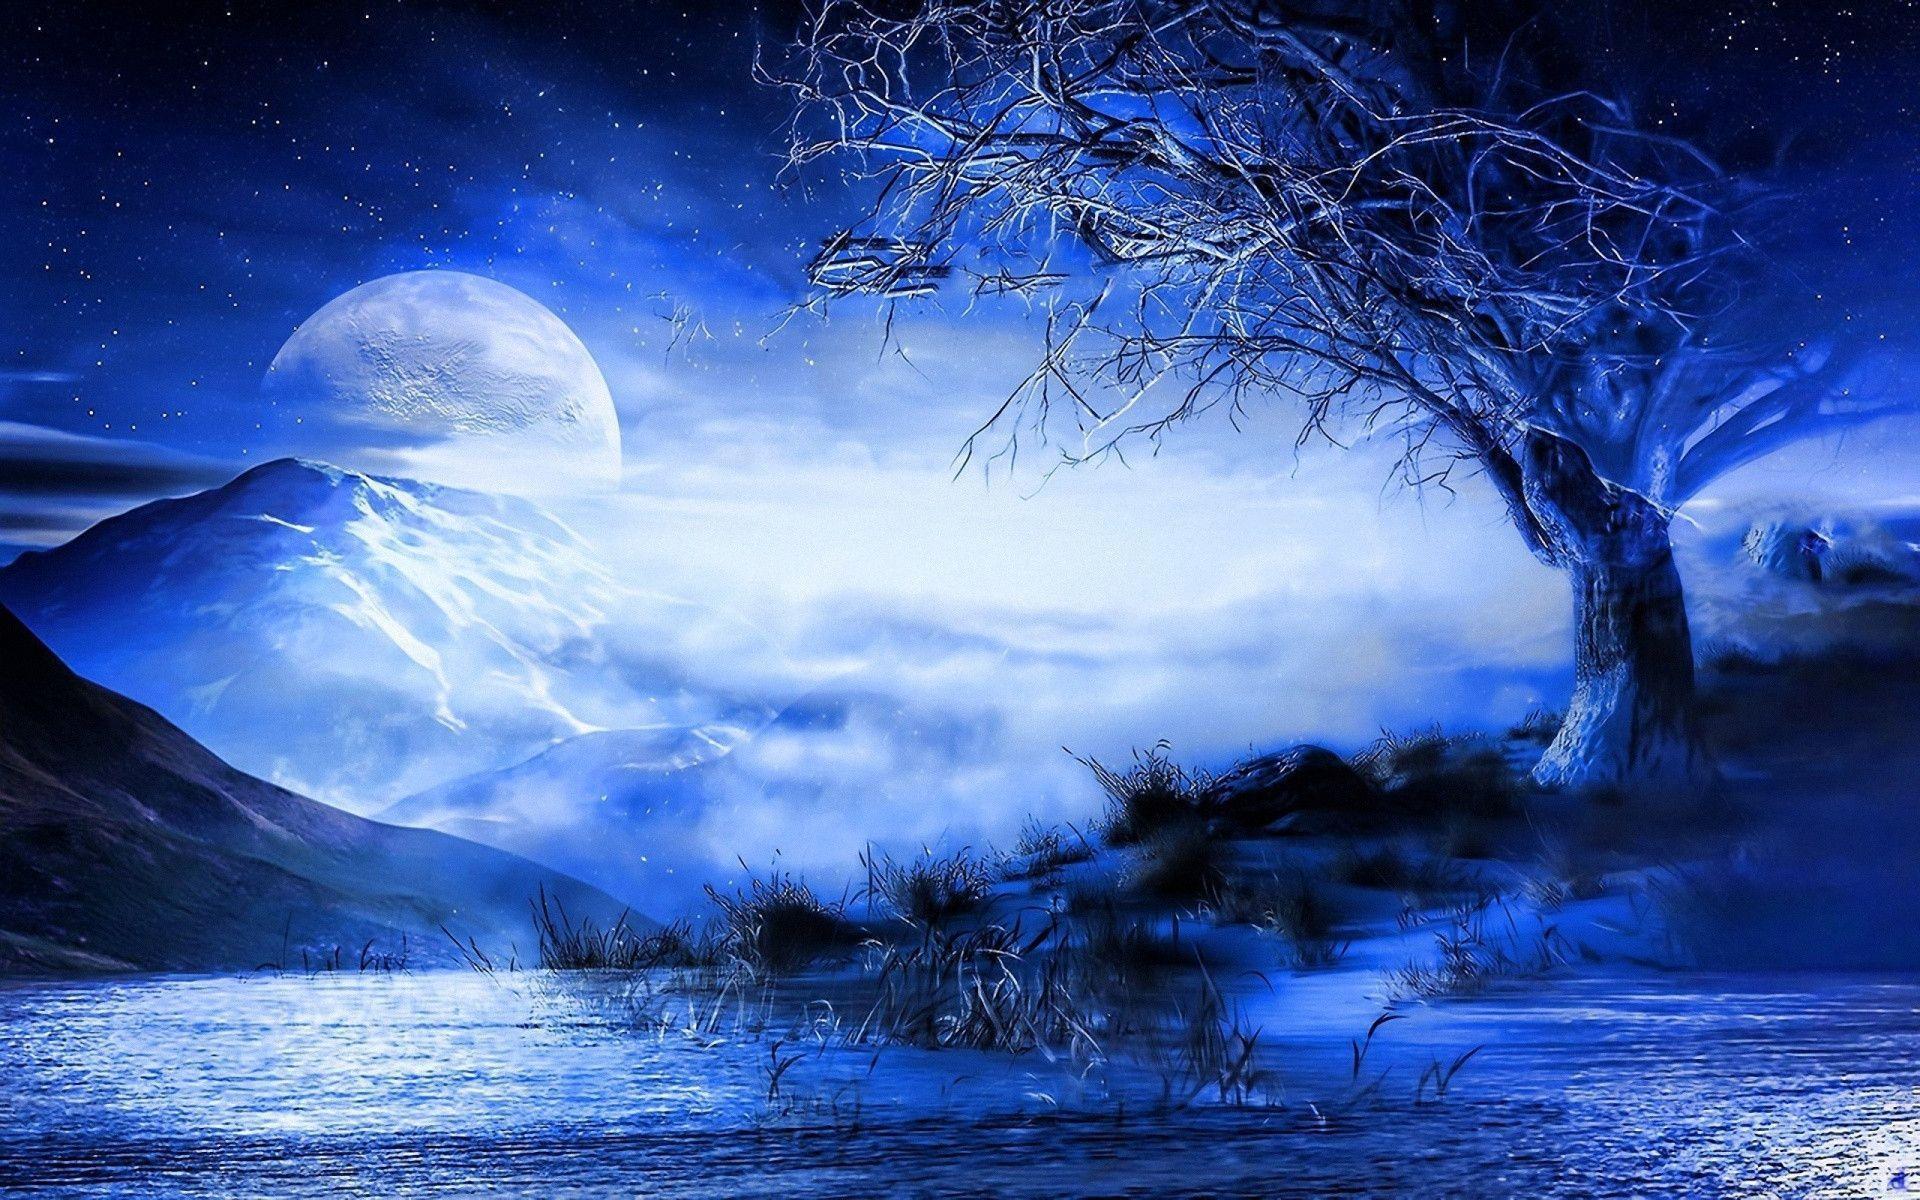 Blue Moon 3D Wallpaper HD. Free HD 3D Desktop Wallpaper